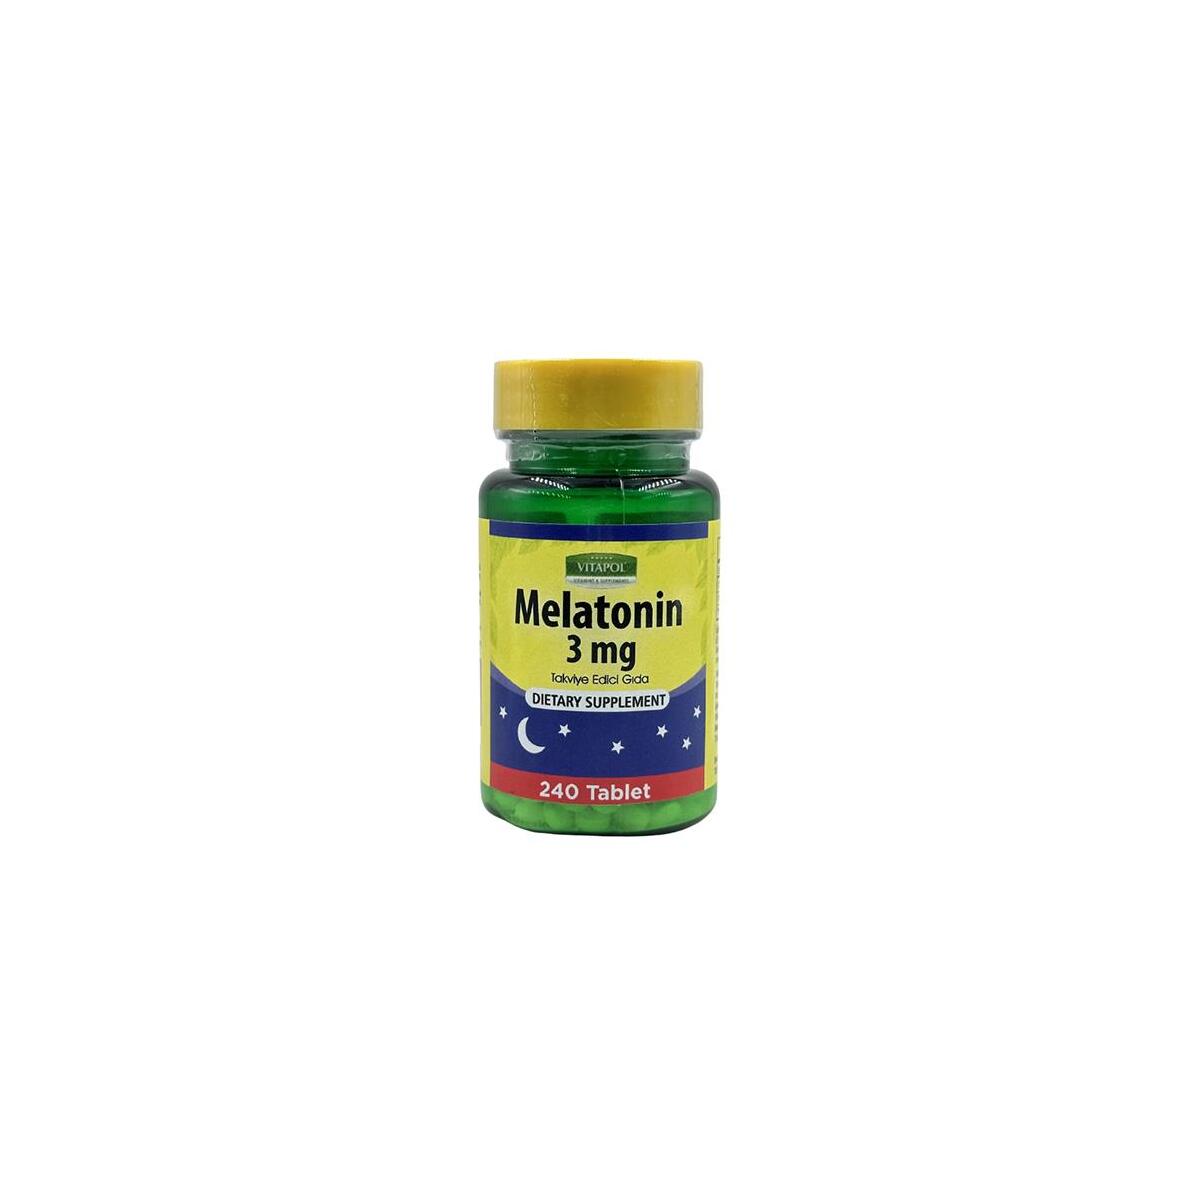 Vitapol Melatonin 3 Mg 240 Tablet